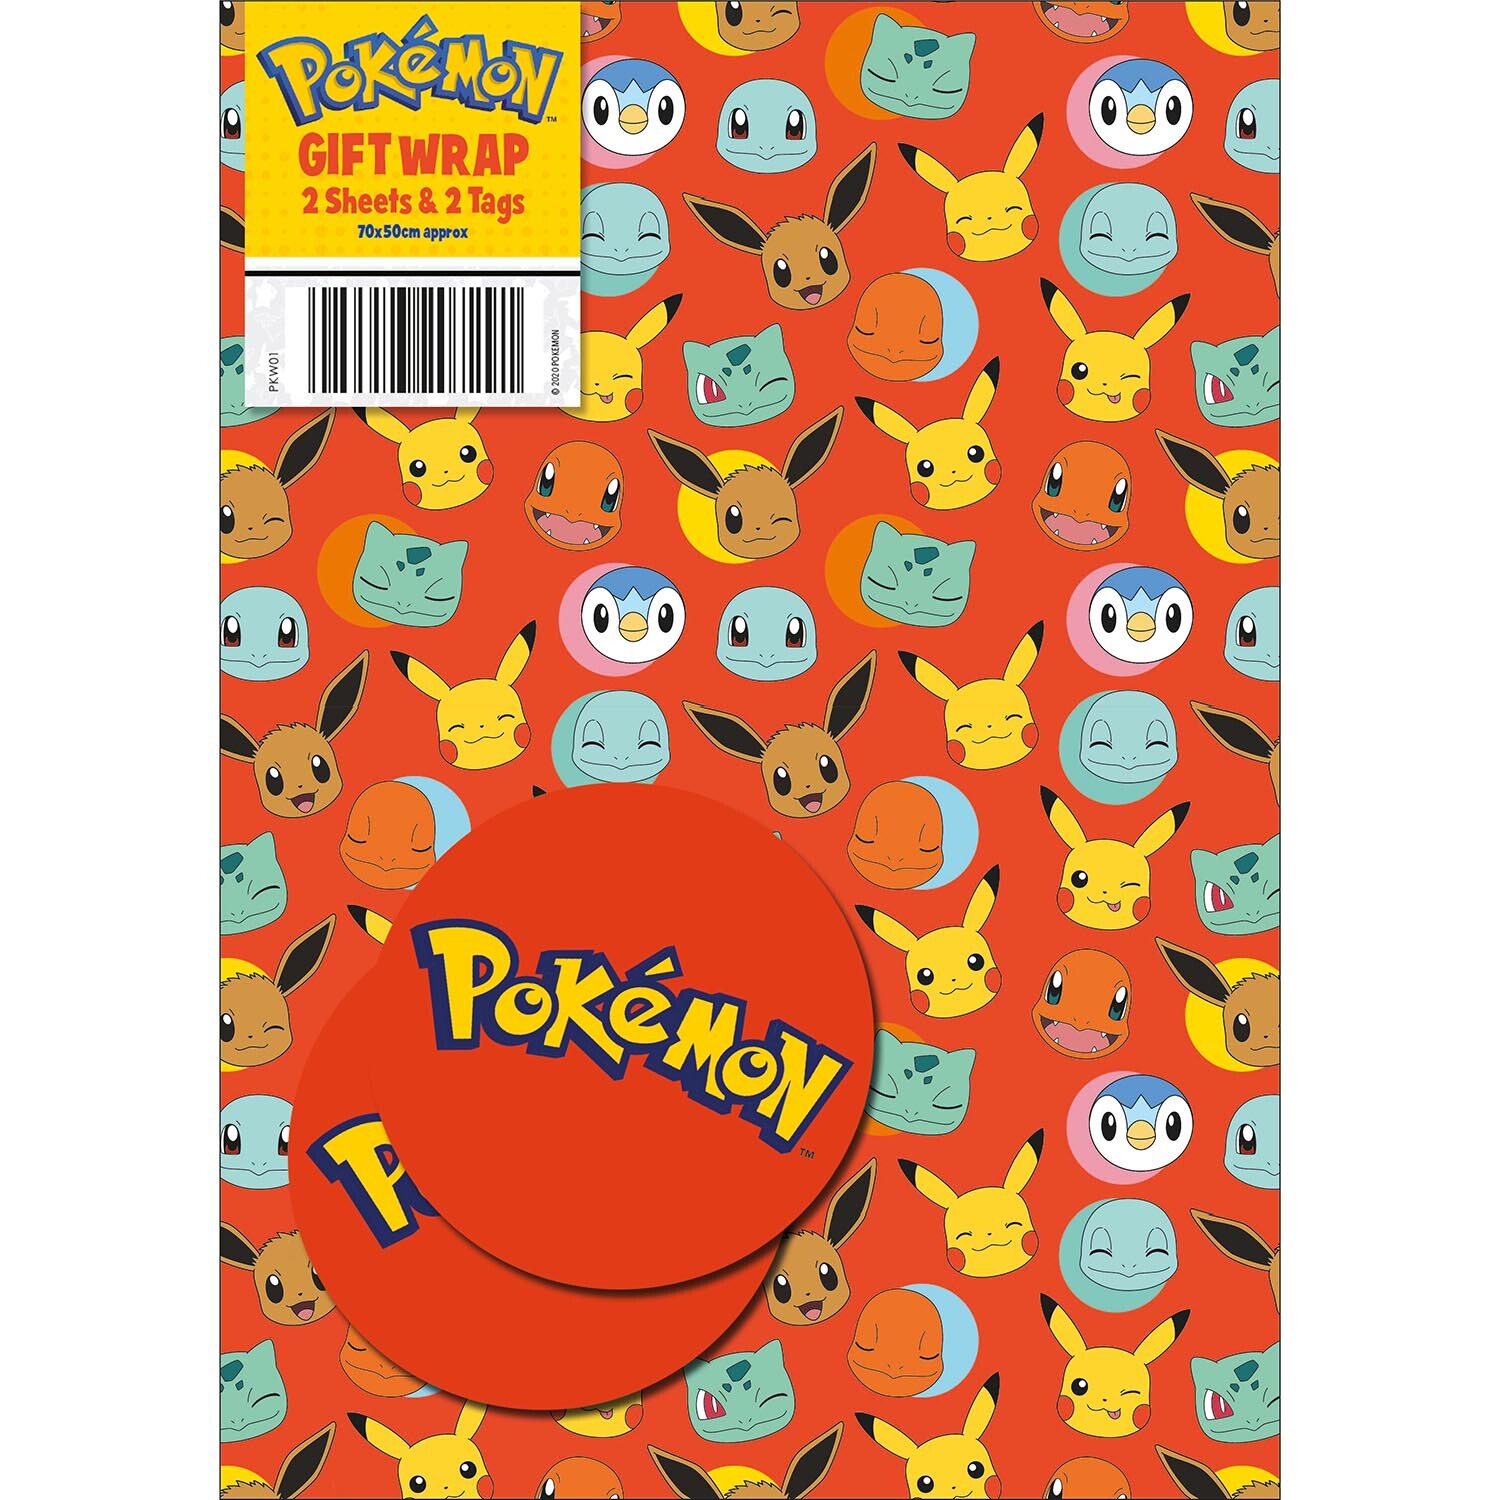 Pack of 2 Pokemon Wrap Sheet and Tags - Orange Image